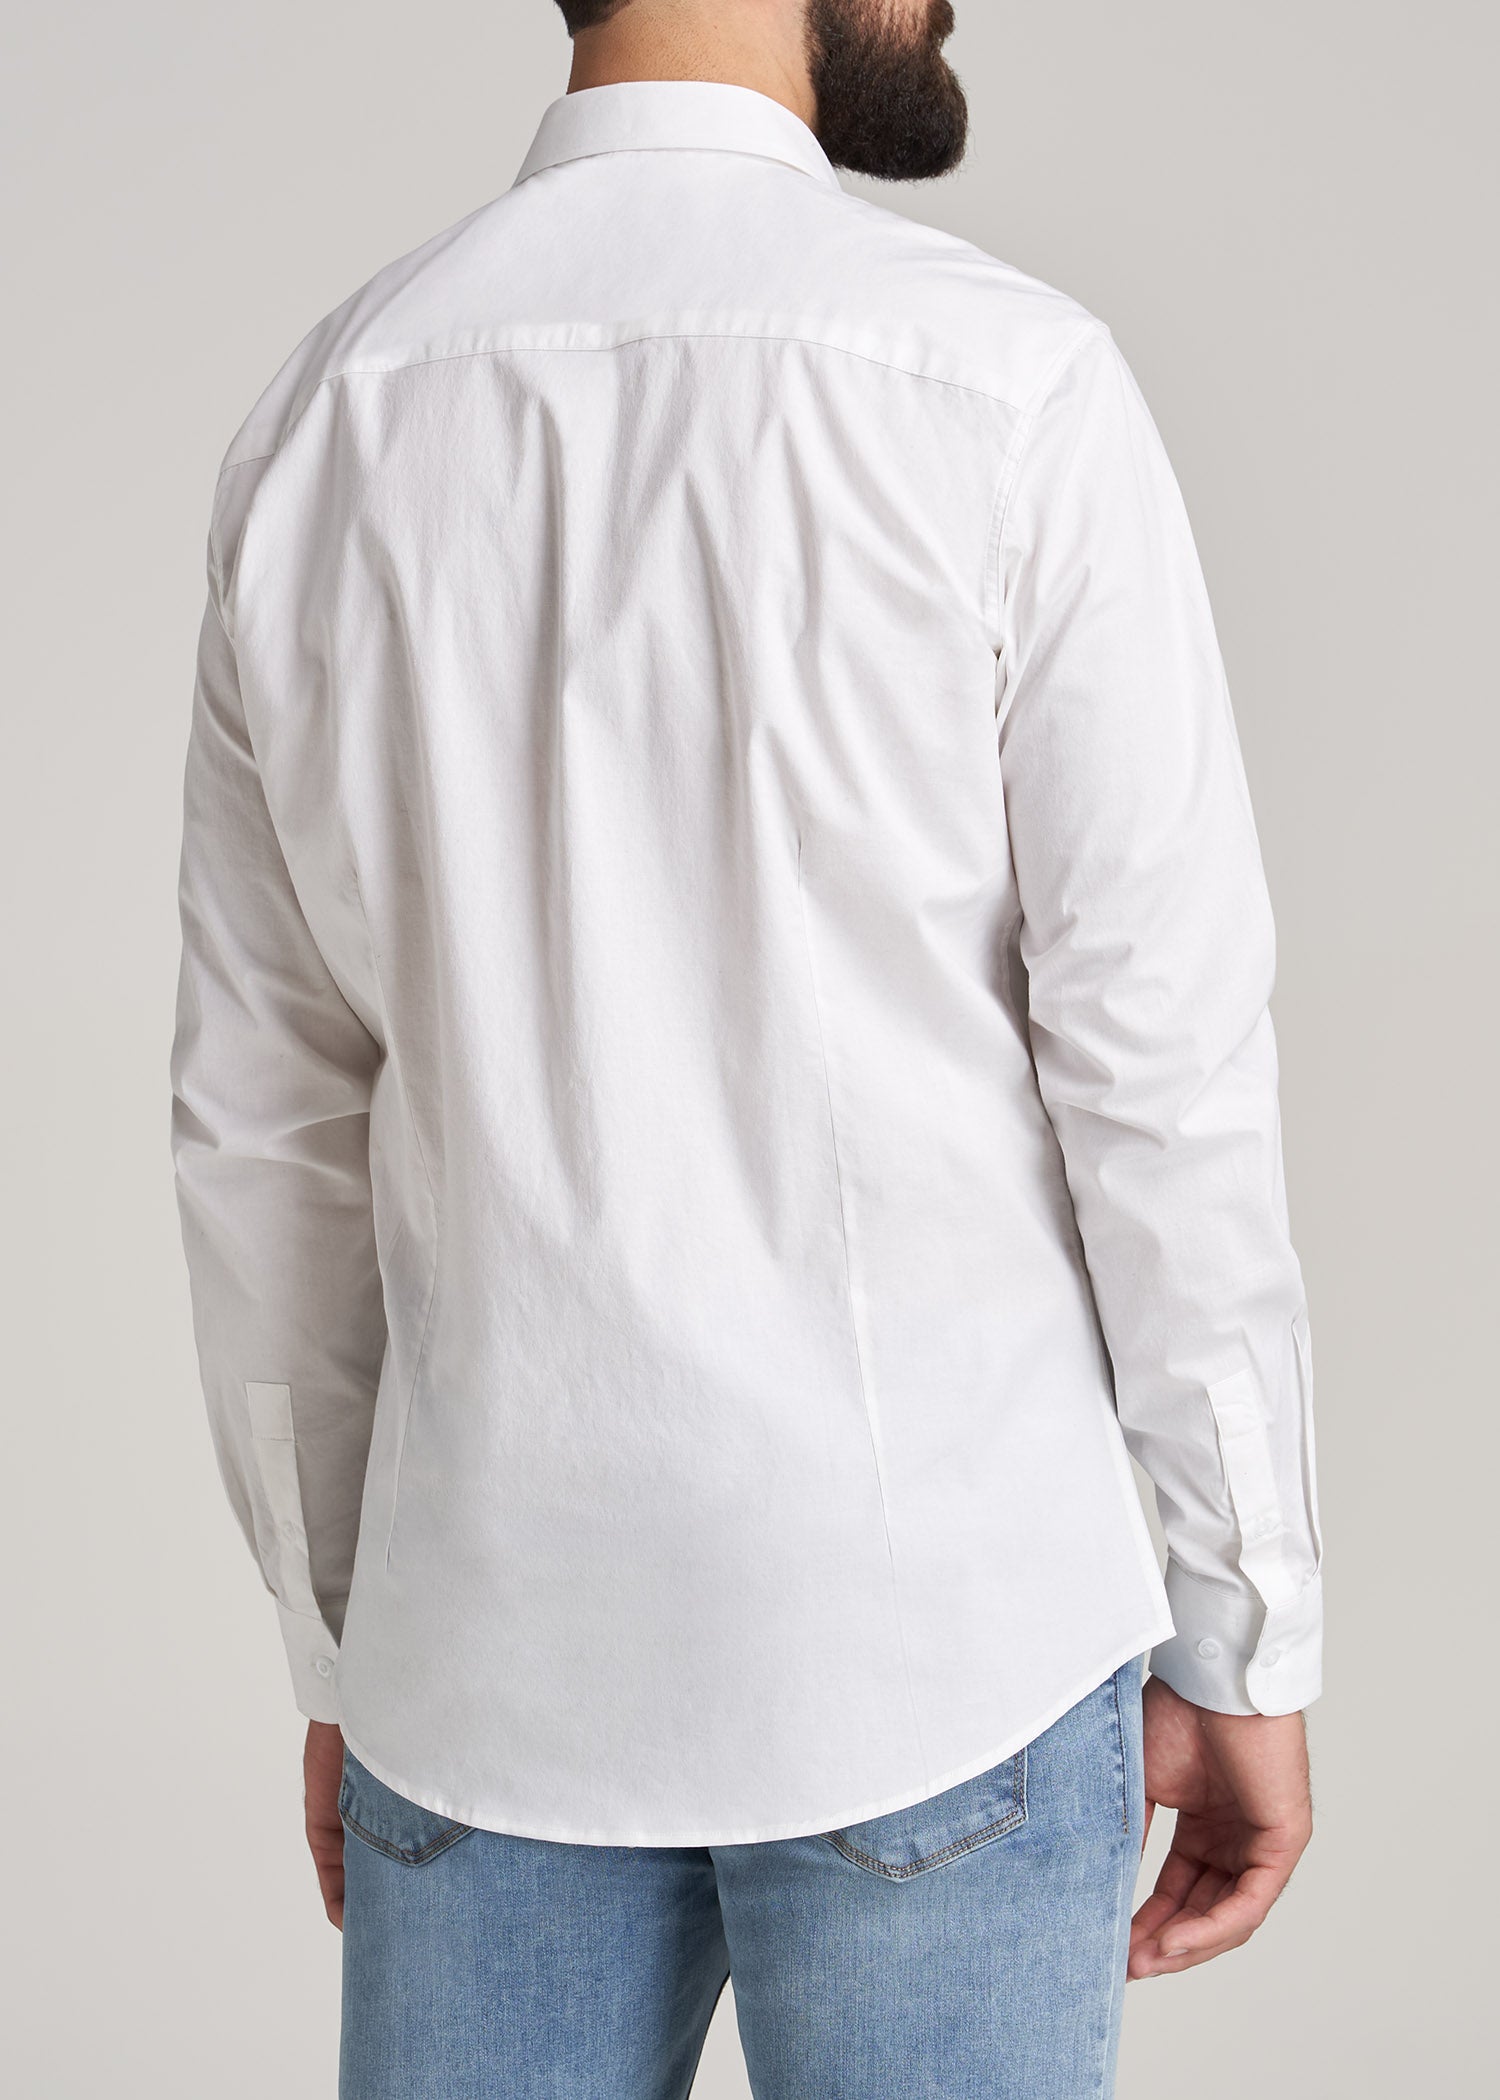 Oskar Button-Up Dress Shirt for Tall Men in Bright White XL / Semi Tall / Bright White